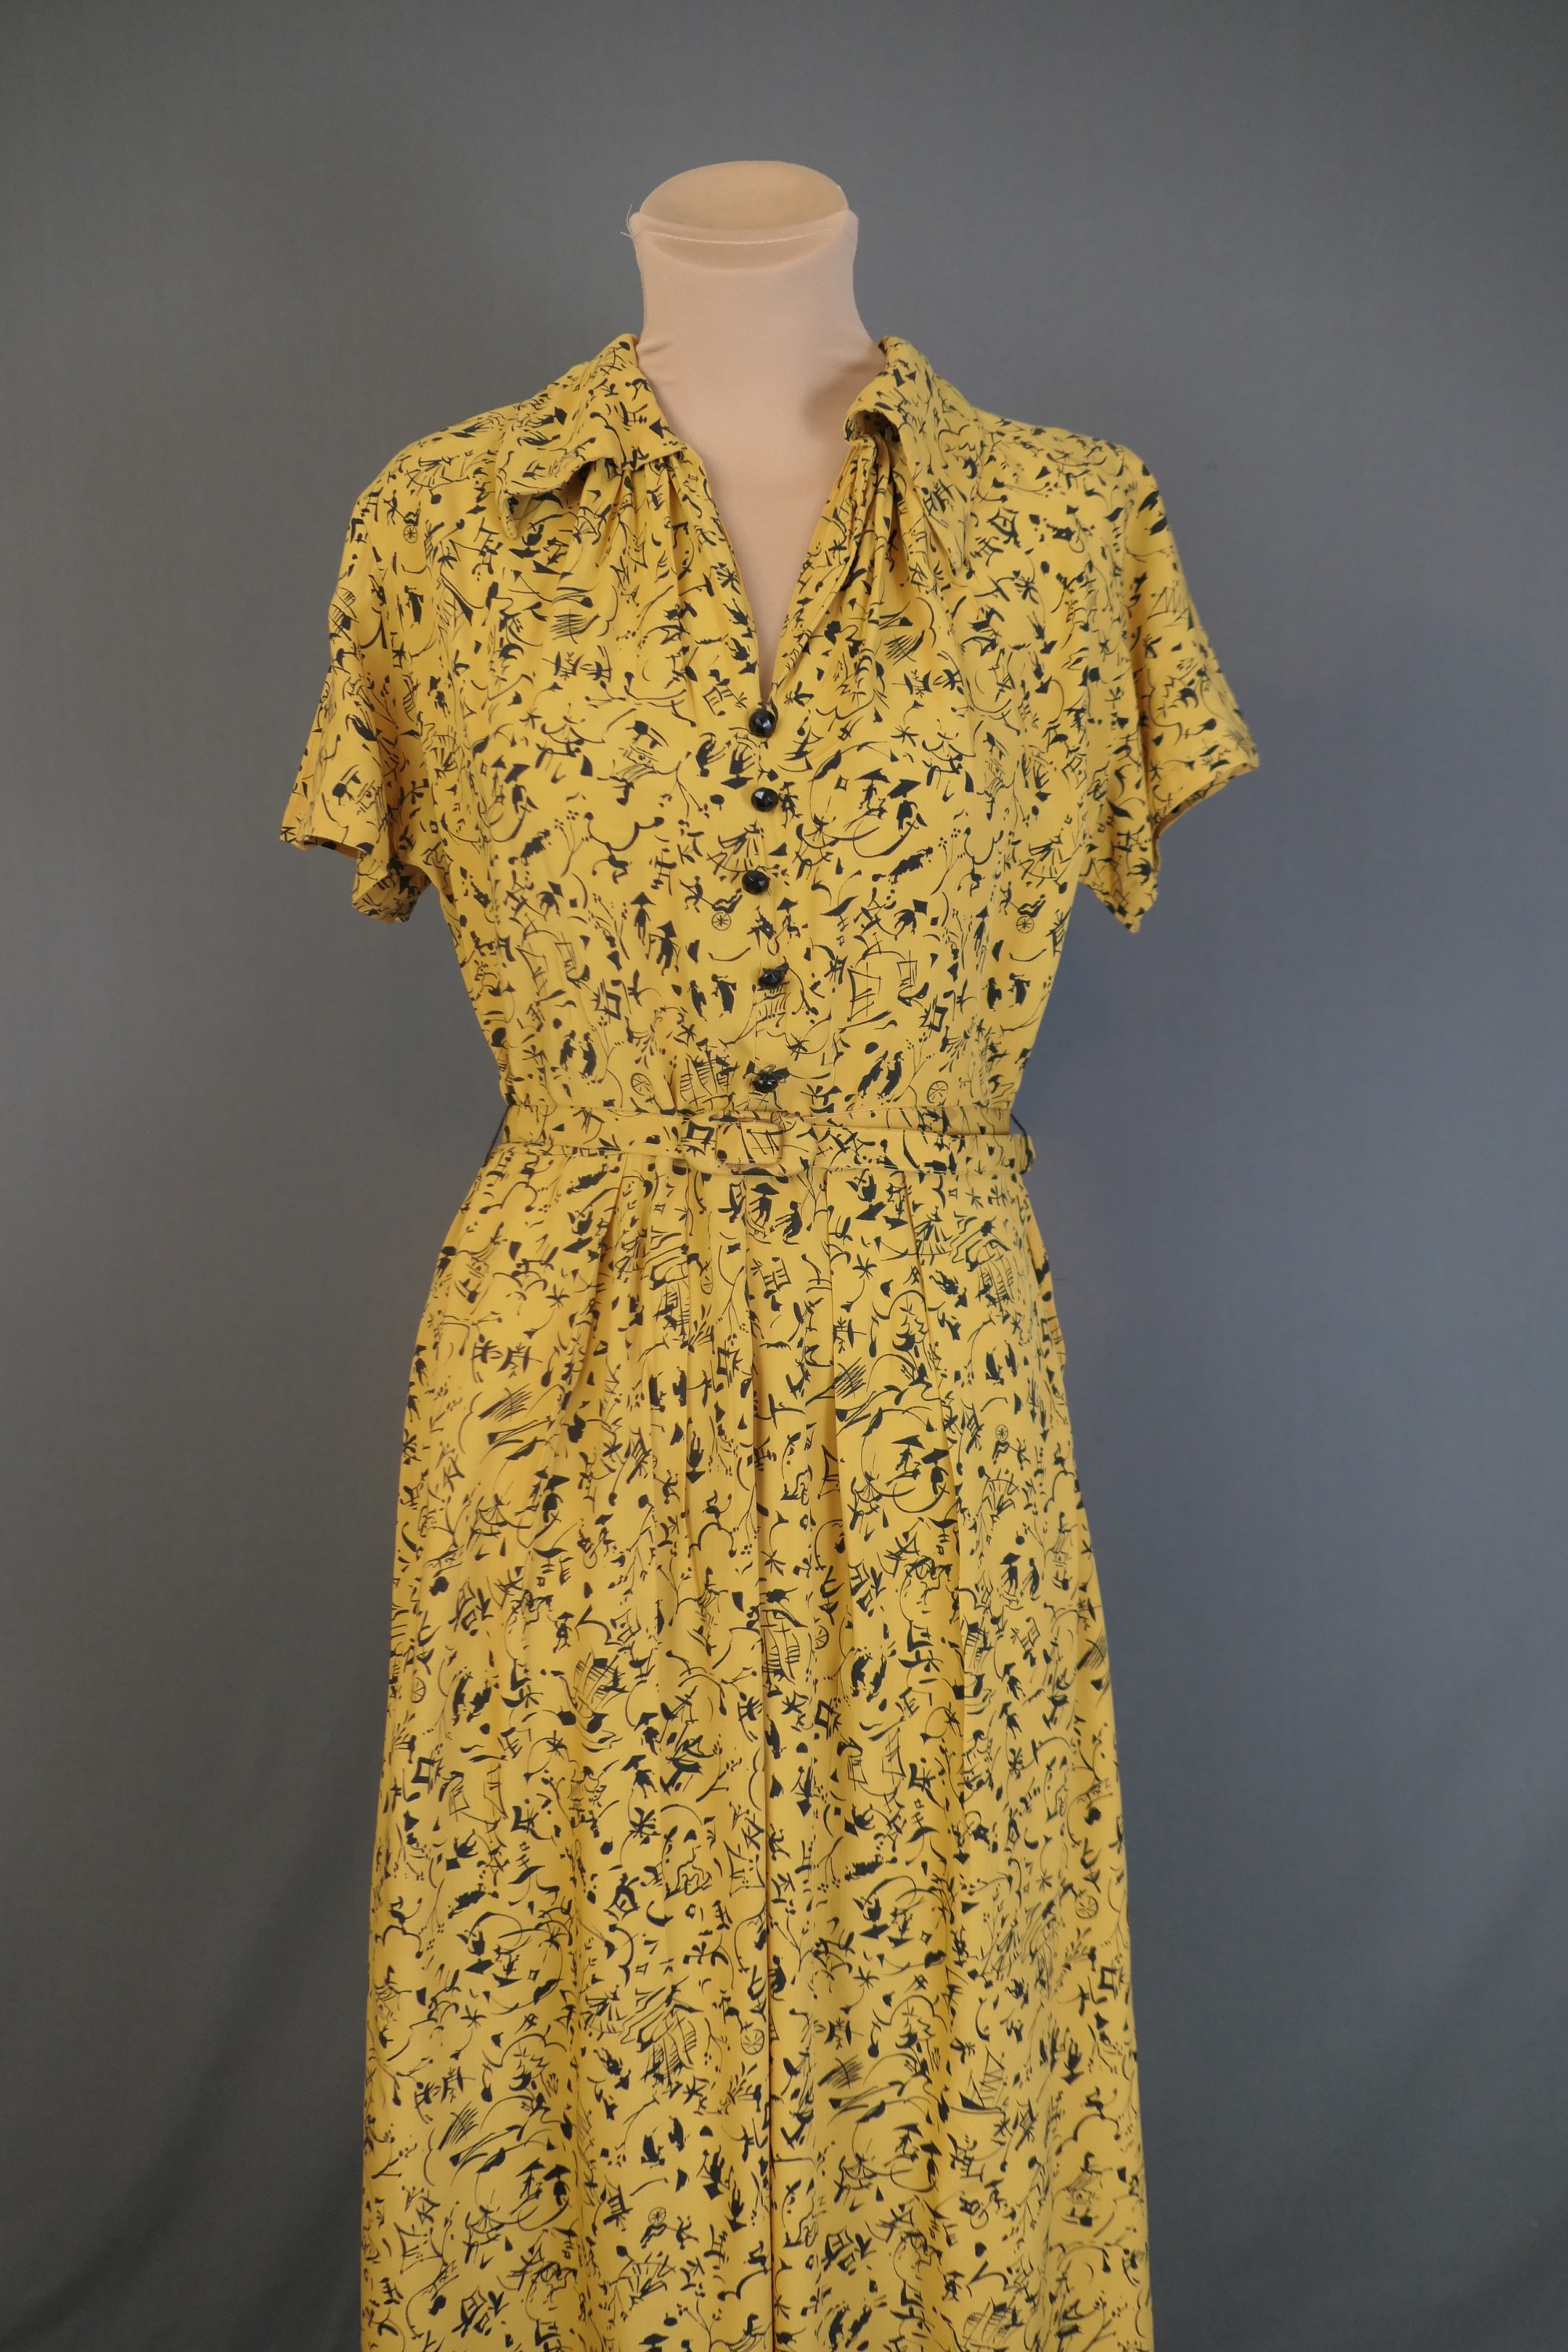 Vintage 1940s Yellow & Black Dress, Rayon Novelty Asian Print, 36 inch bust  - Dandelion Vintage